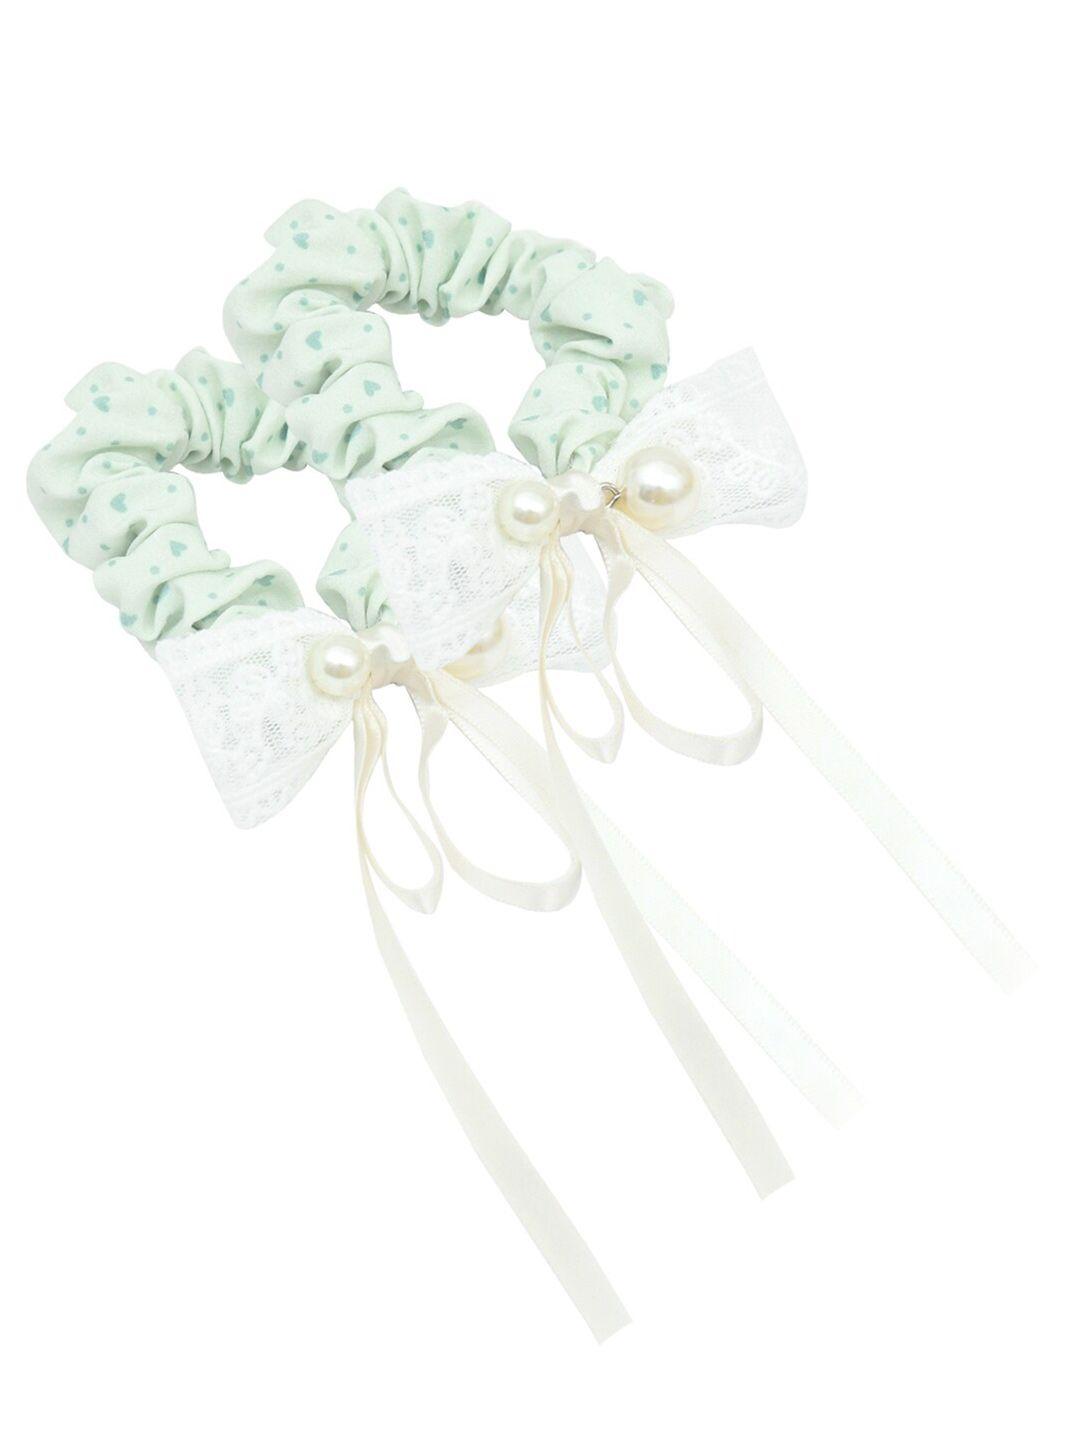 funkrafts girls green & white set of 2 hair accessory set